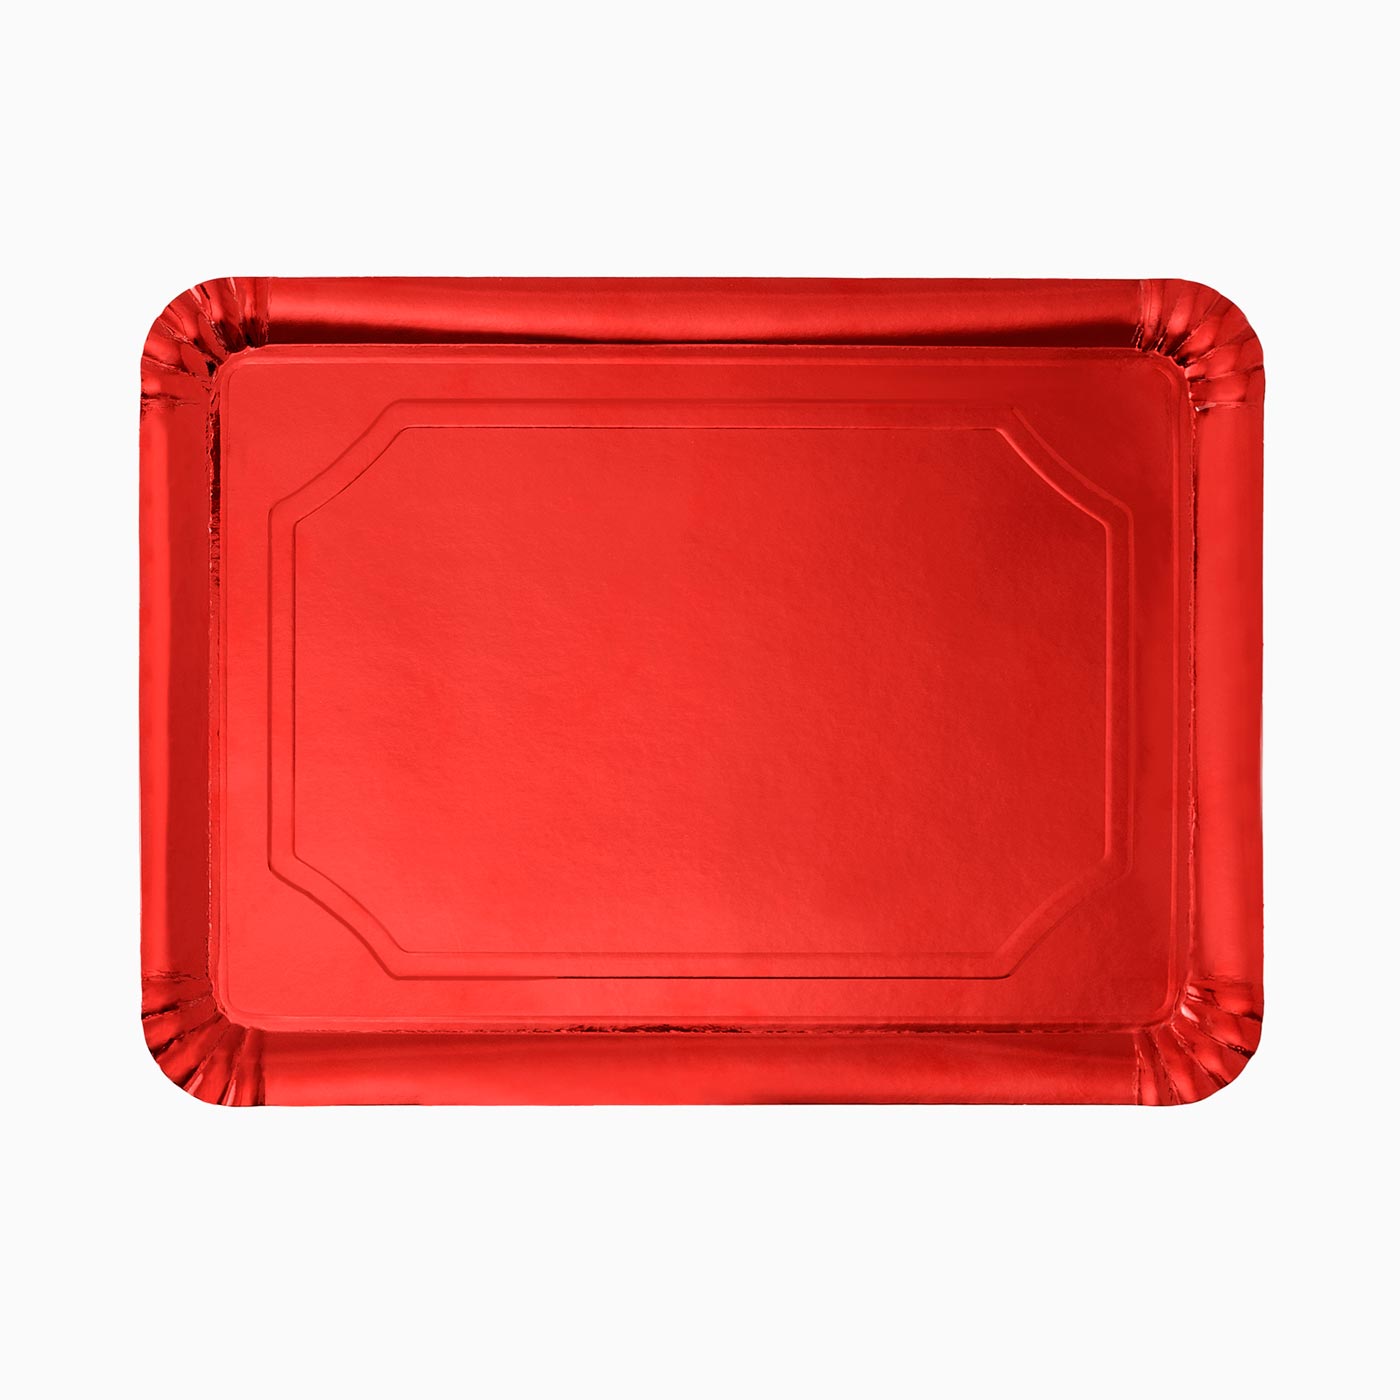 Bandeja Rectangular Metalizada Cartón Rojo 25 x 34 cm